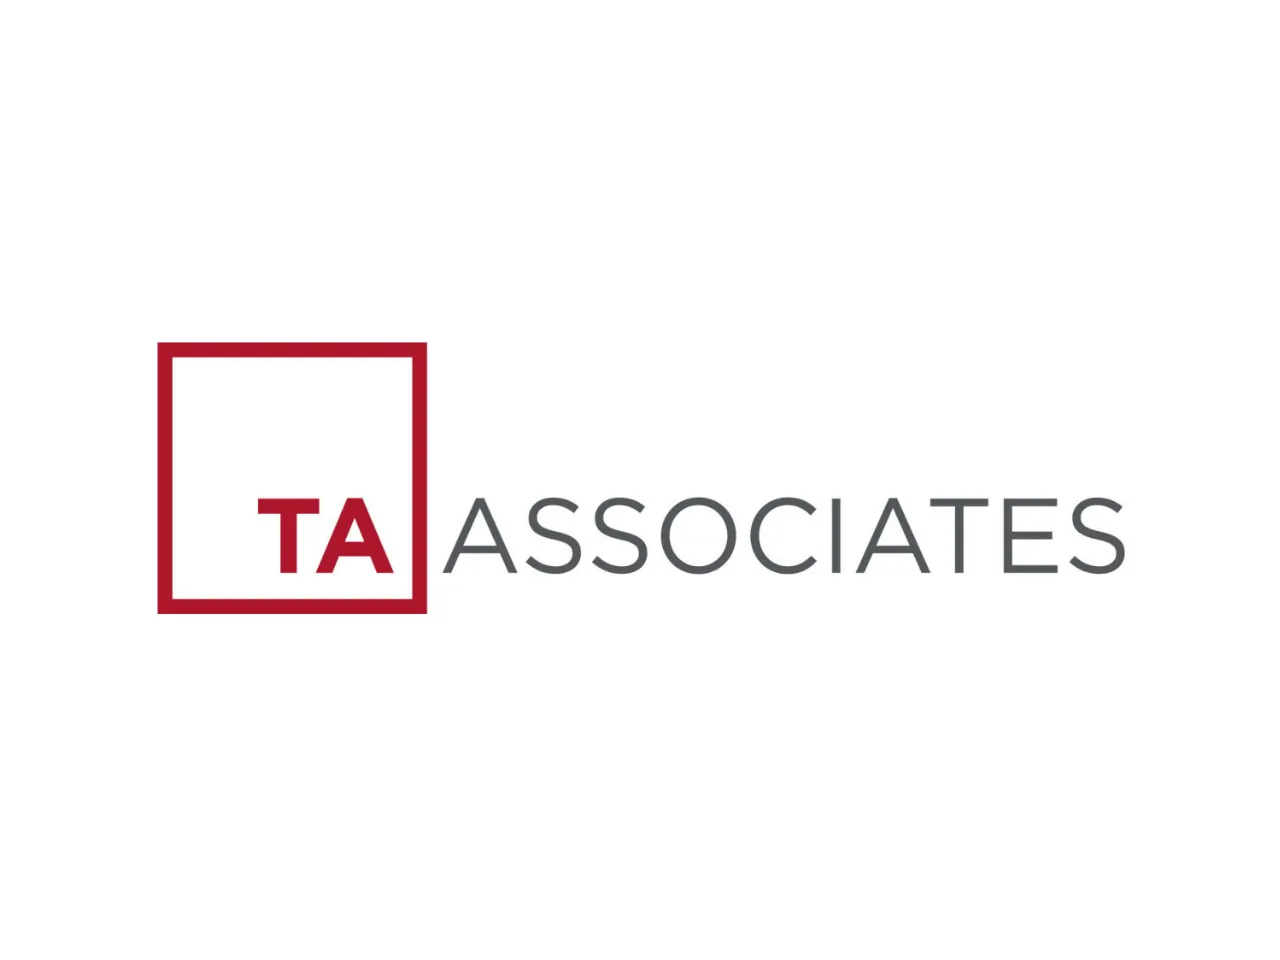 TA Associates, the backer of NSE, BillDesk, raises $16.5 billion for its new PE fund